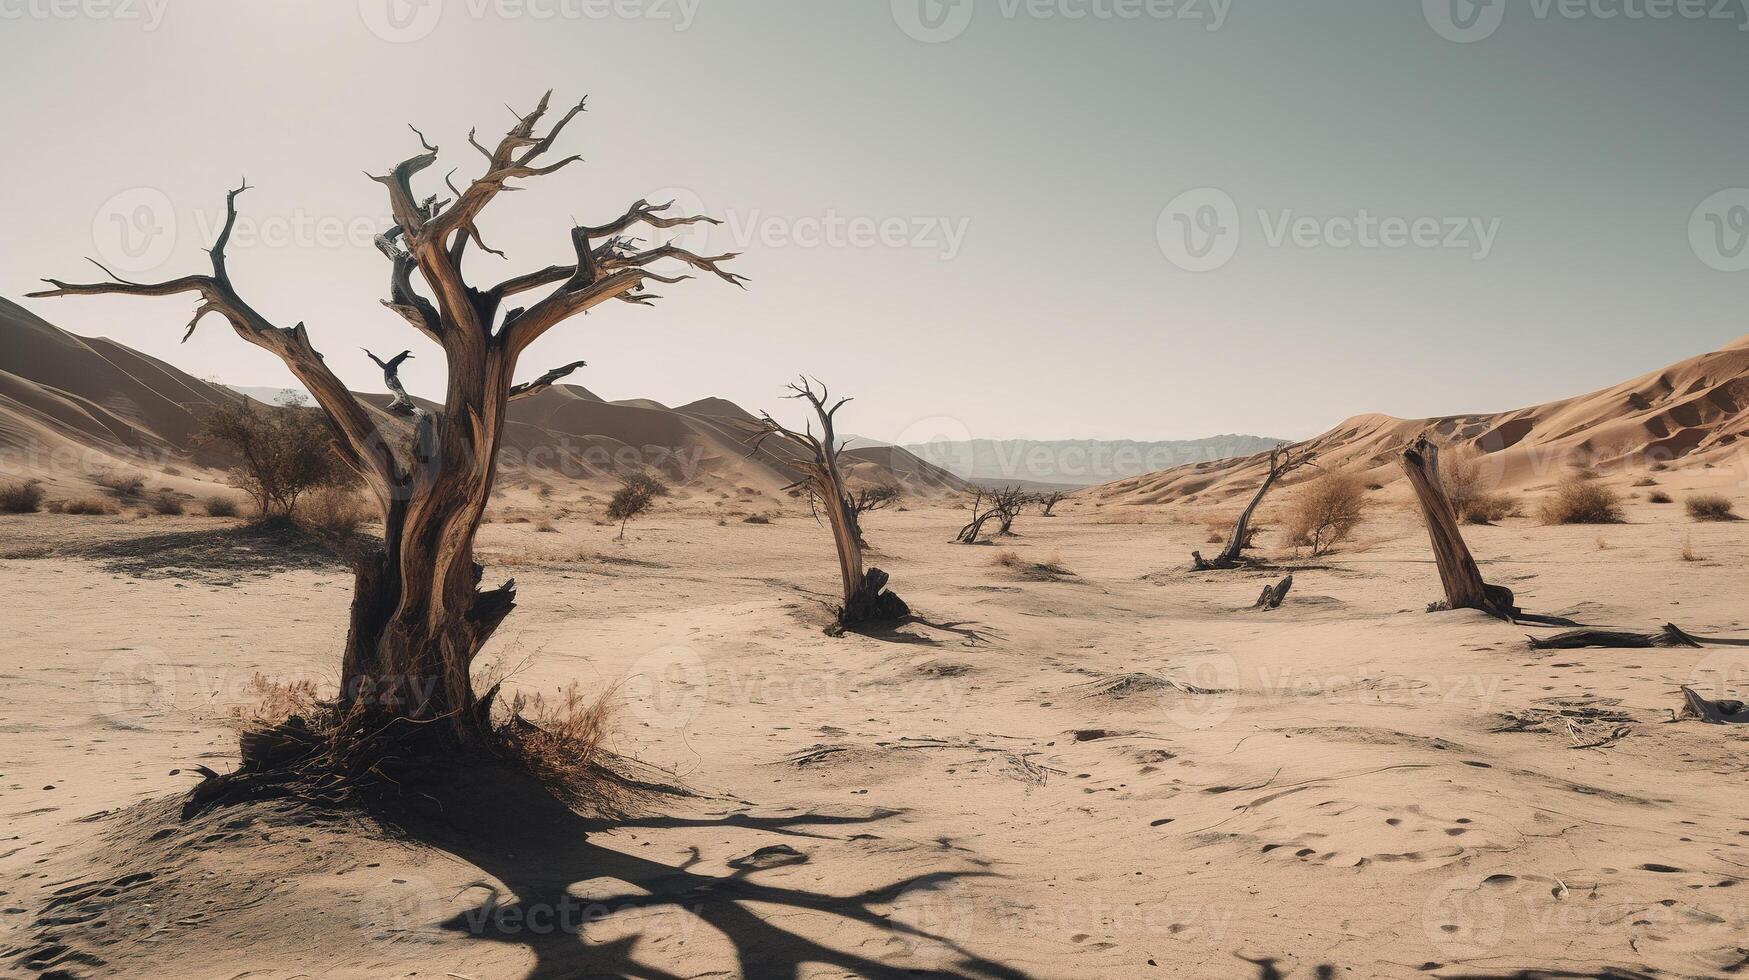 Dead trees in the Namib Desert, Namibia, Africa. photo